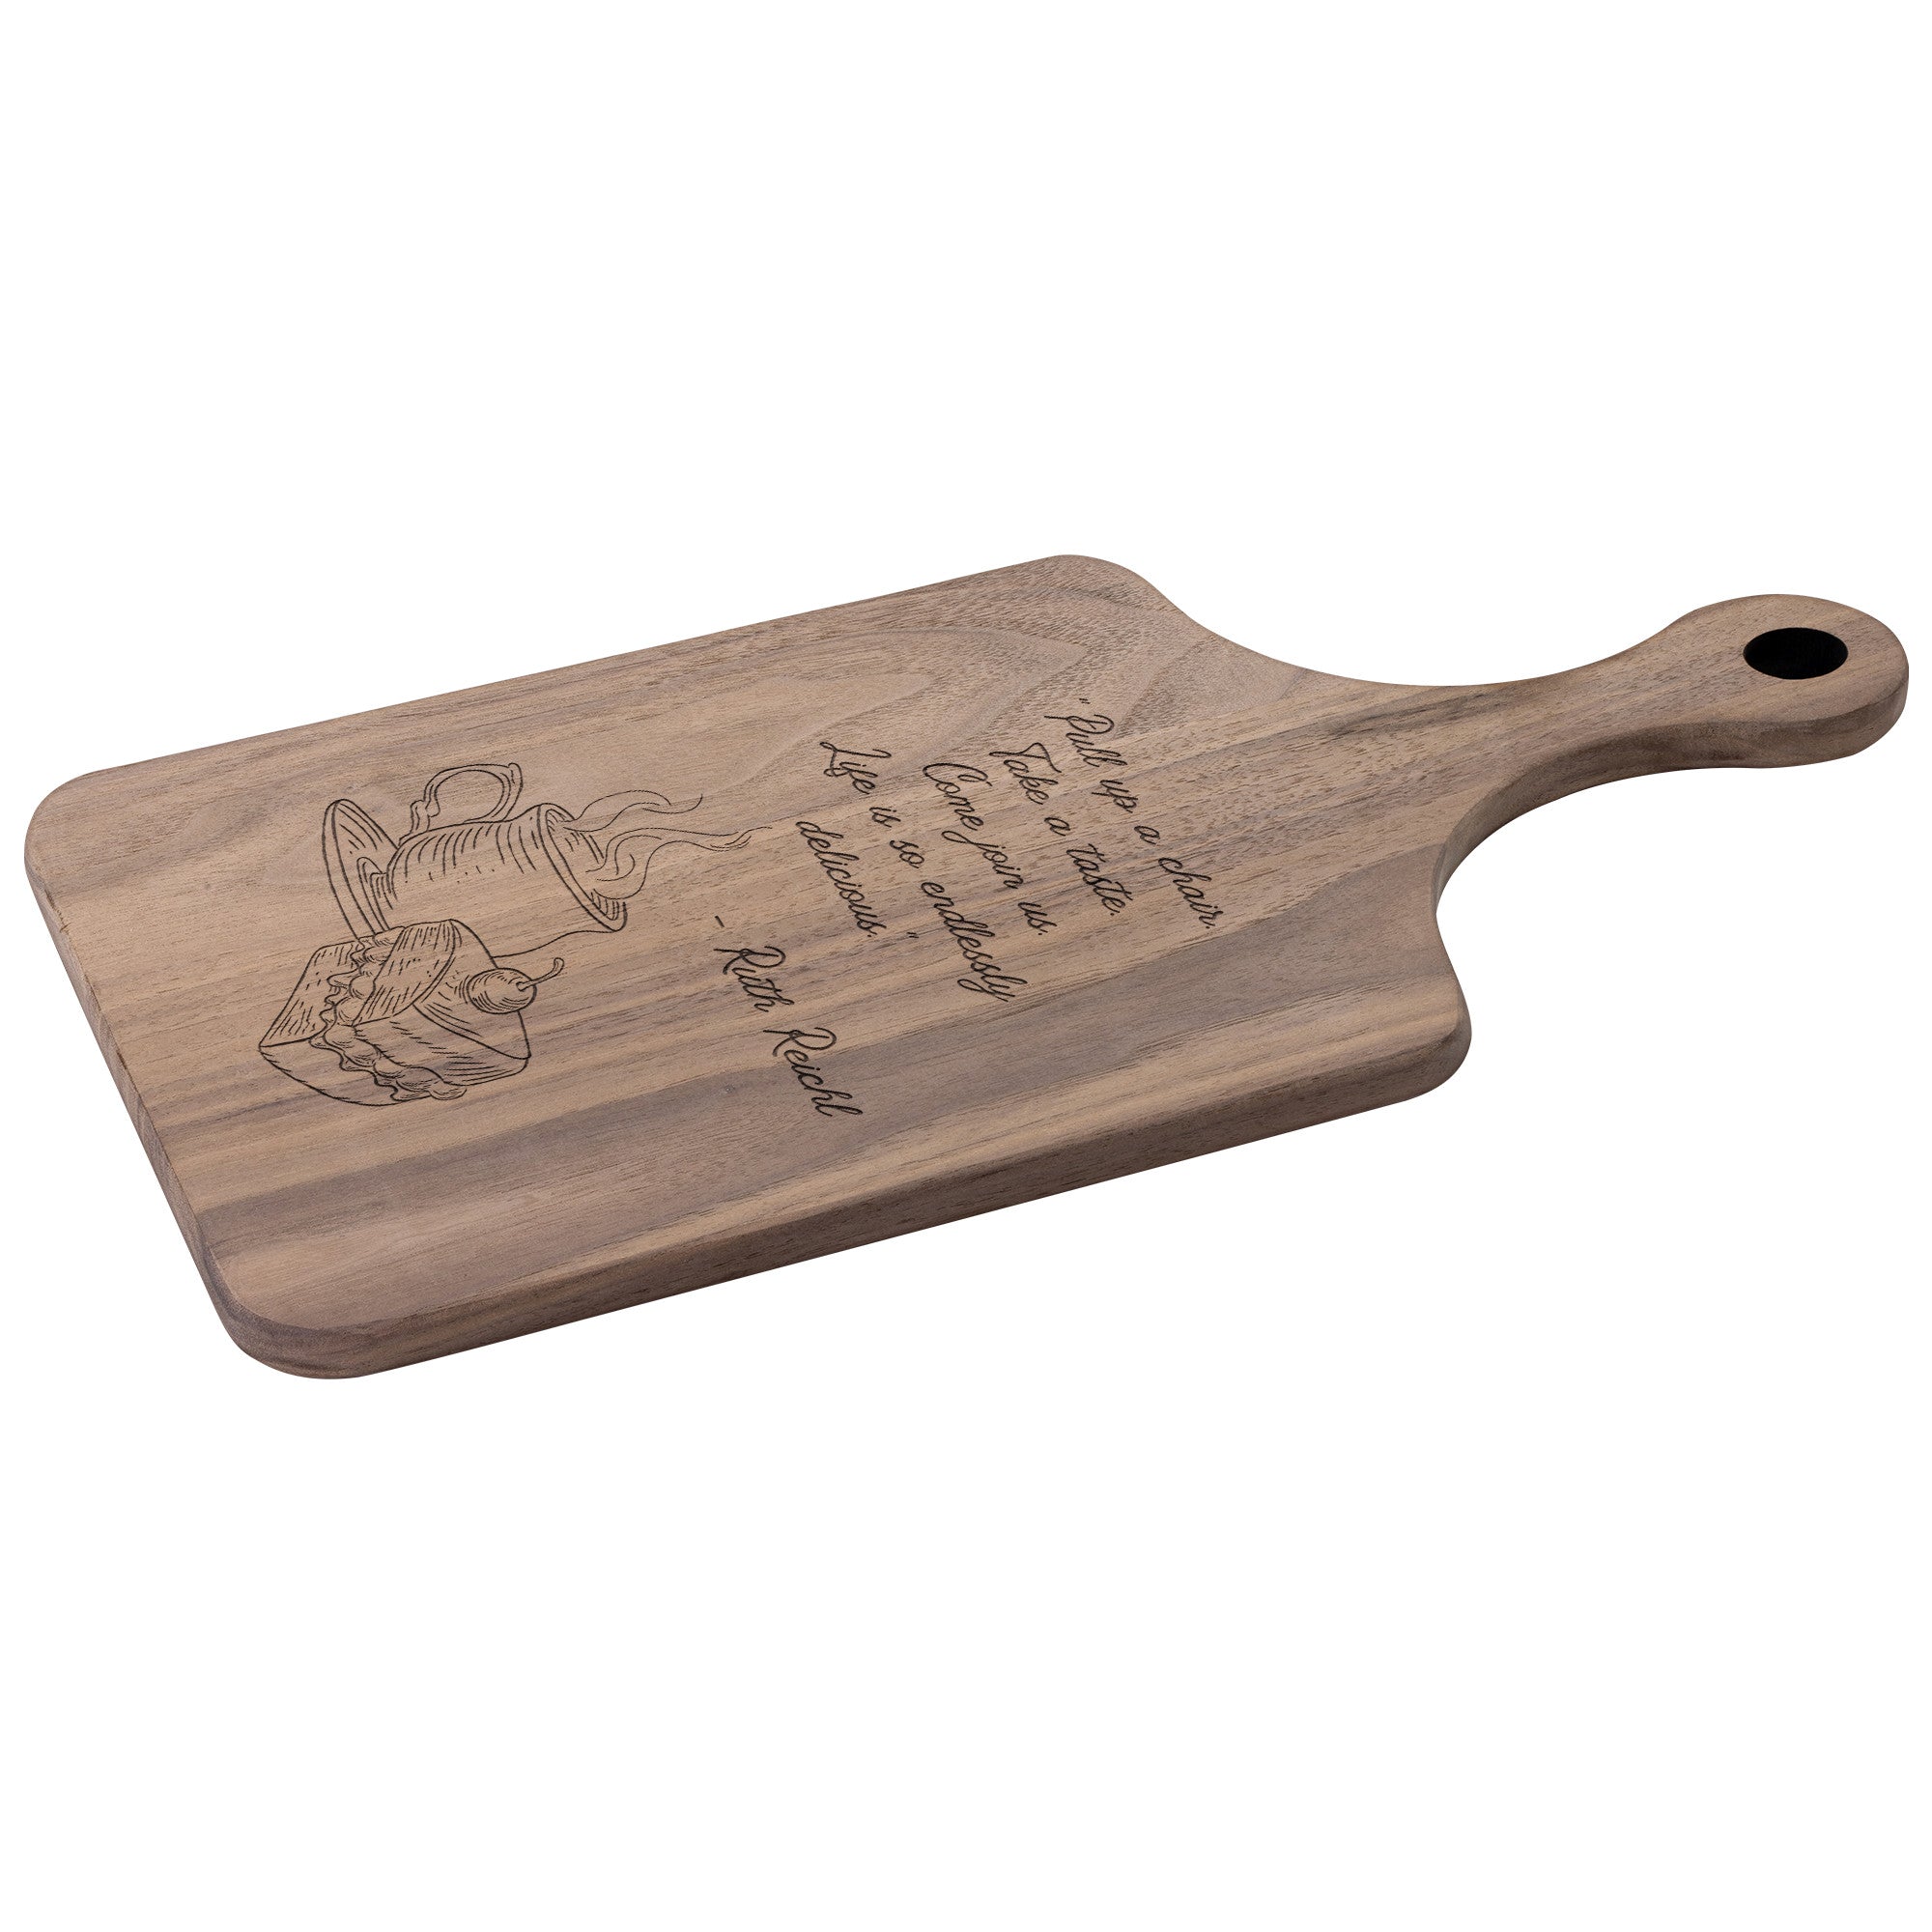 Hardwood Paddle Cutting Board - Variant 18